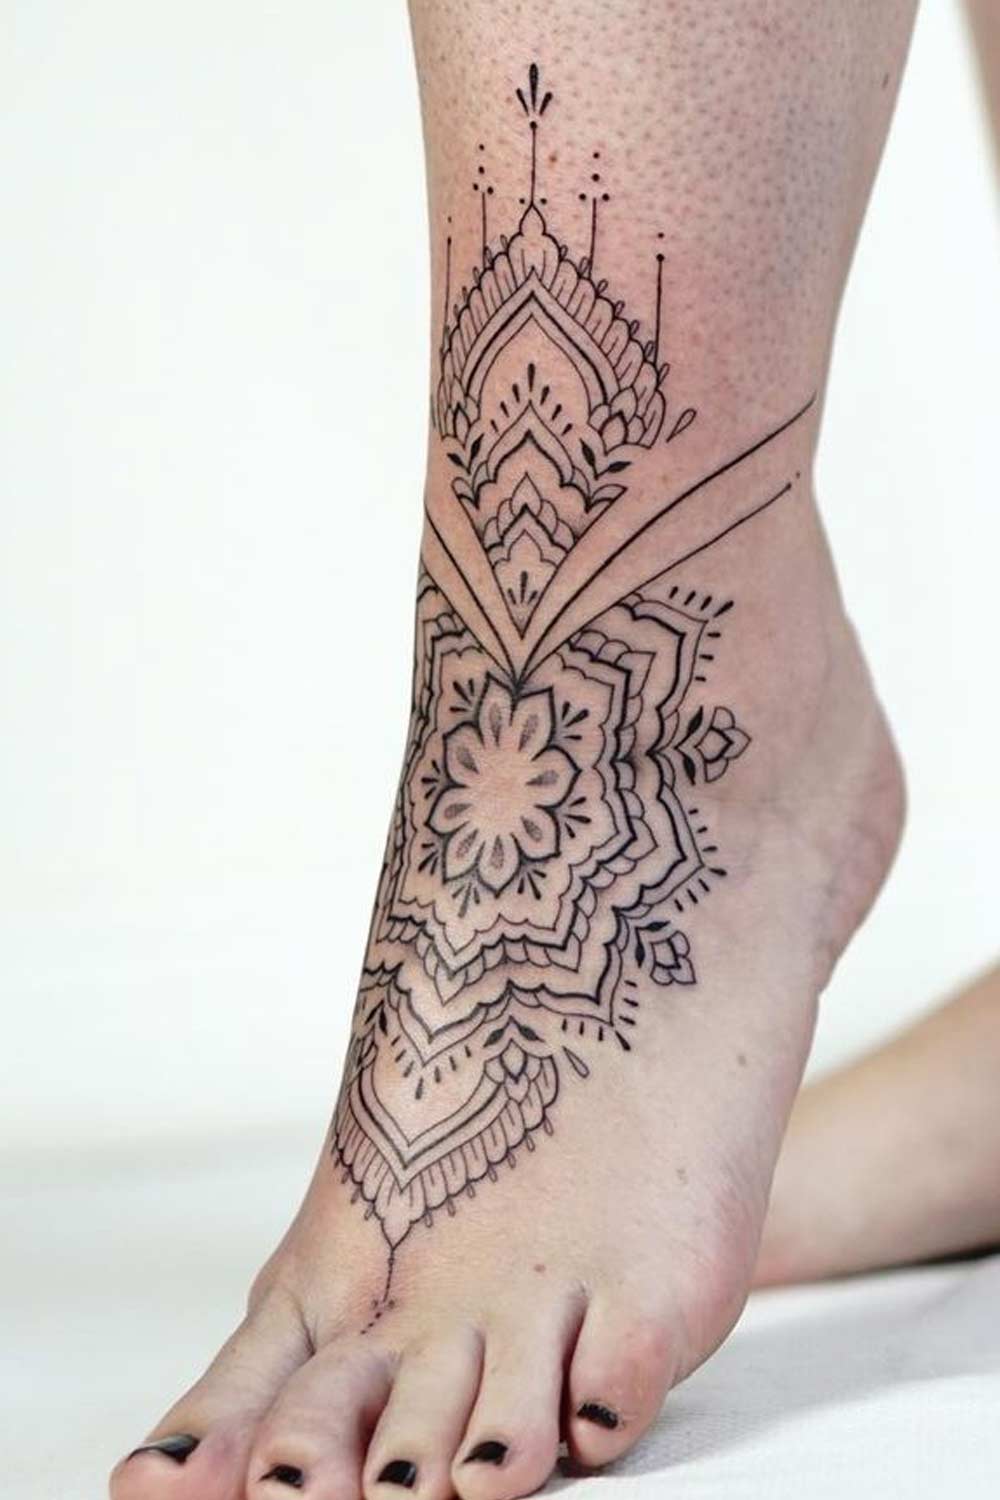 small girly tattoos foot | via DotWallpapers.net dotwallpape… | Flickr